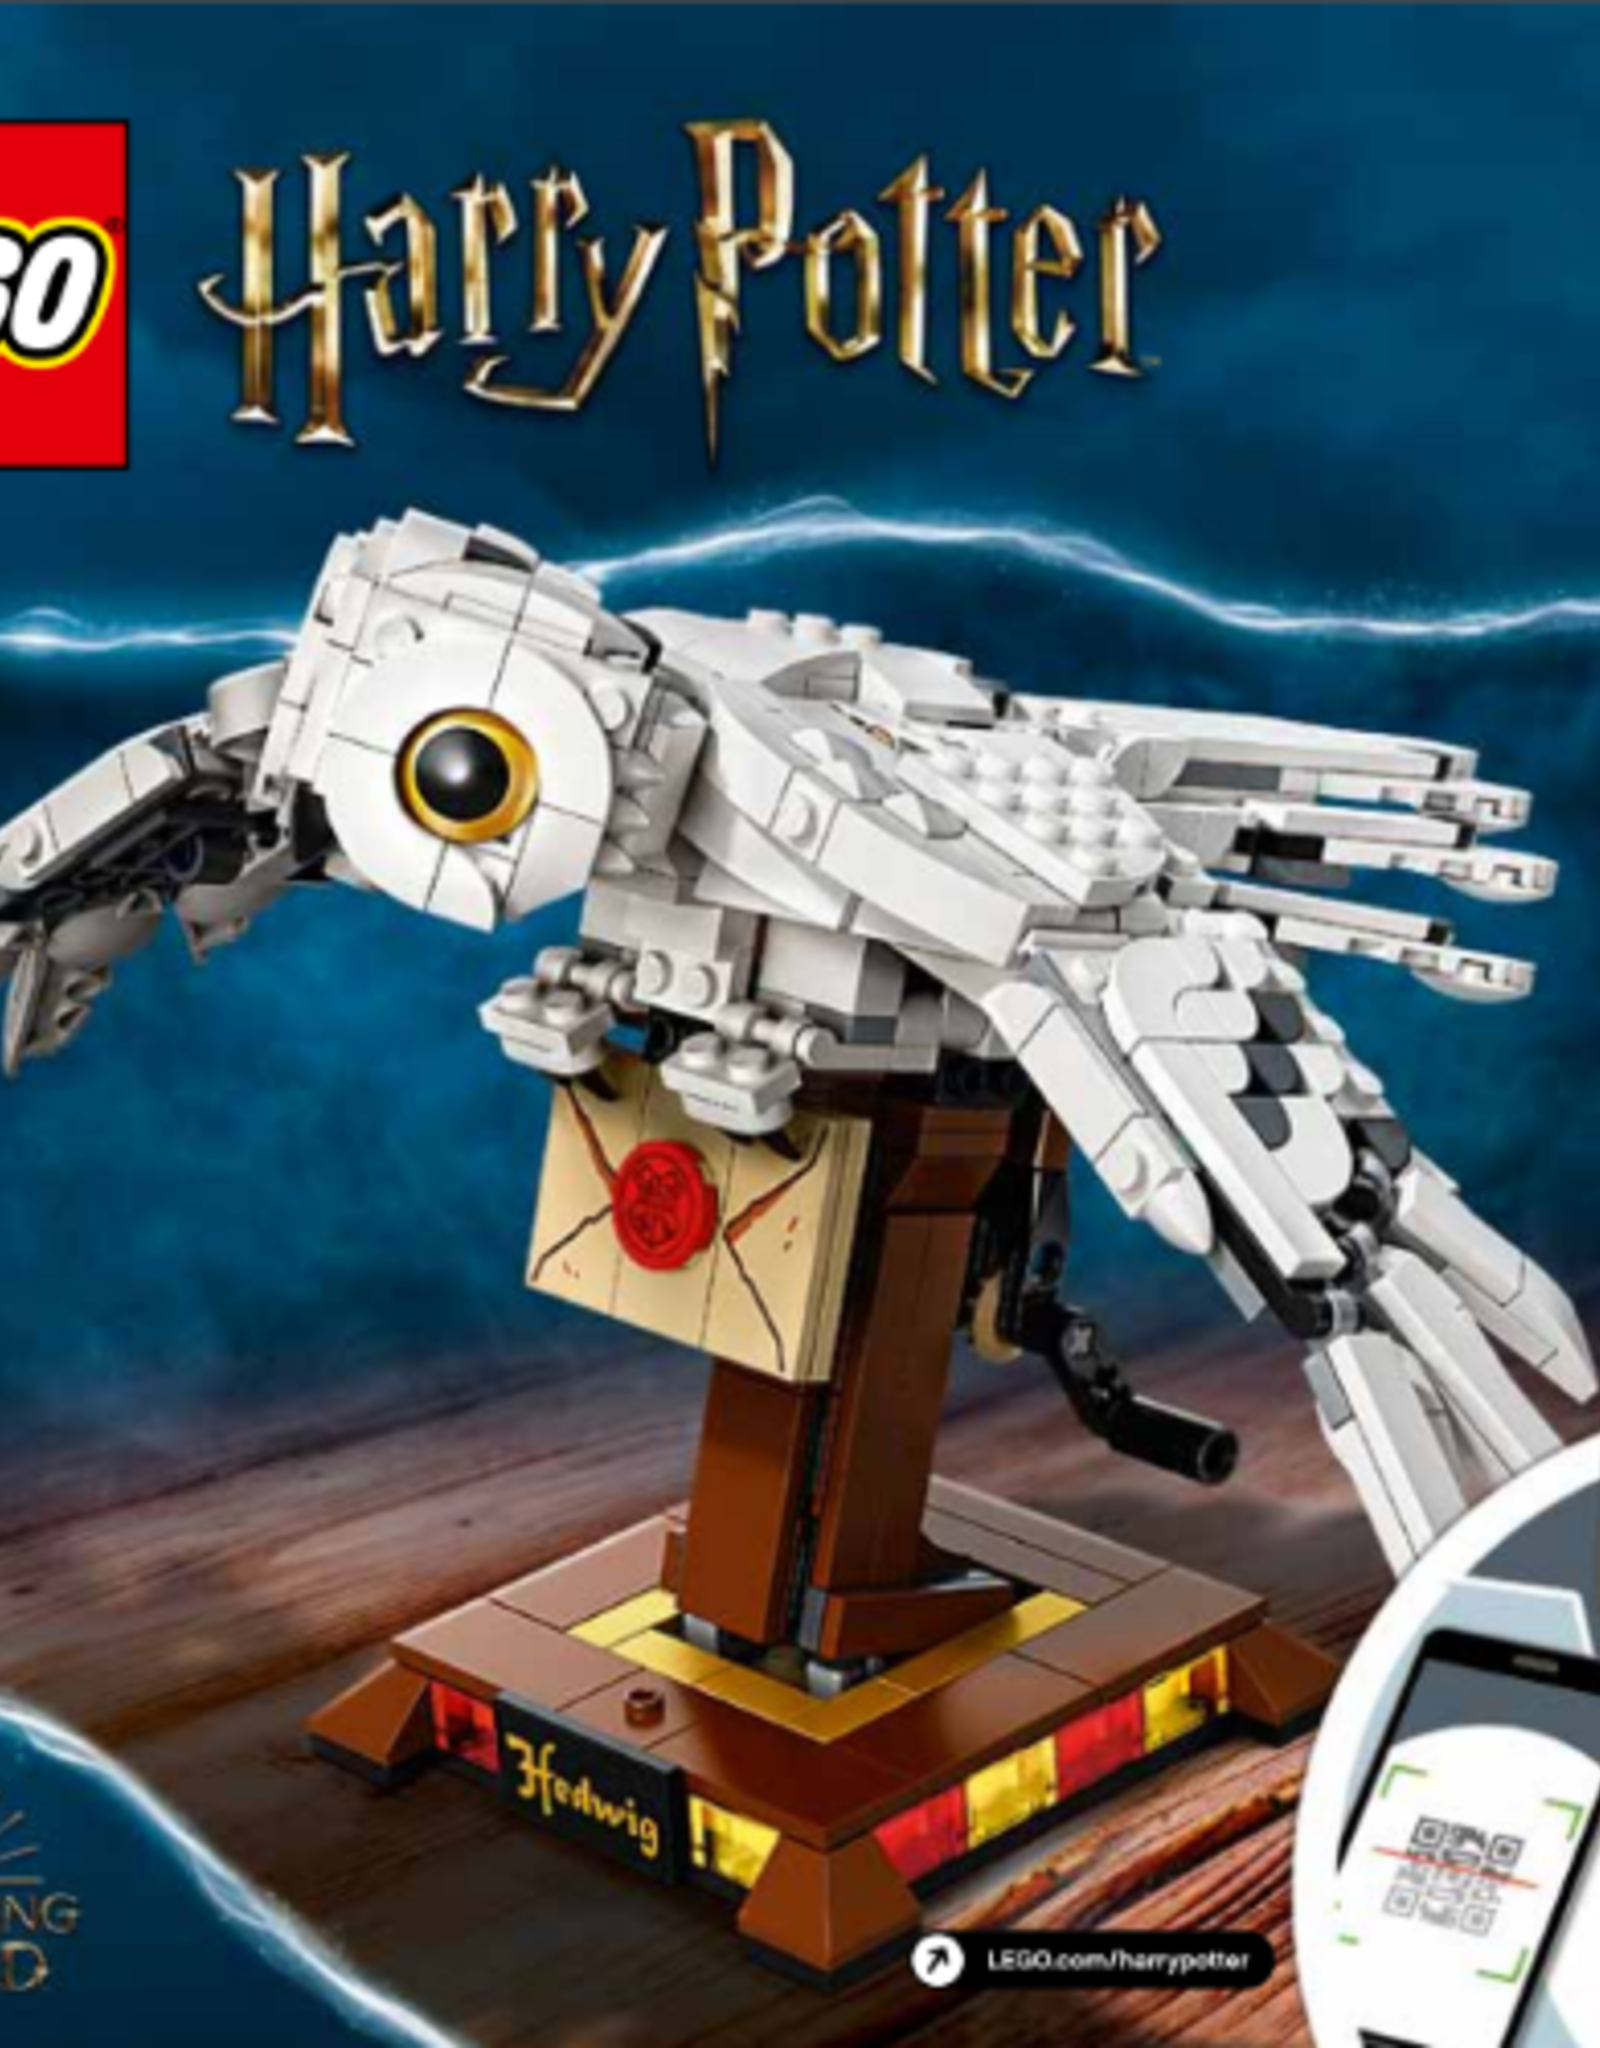 LEGO LEGO 75979 Hedwig HARRY POTTER